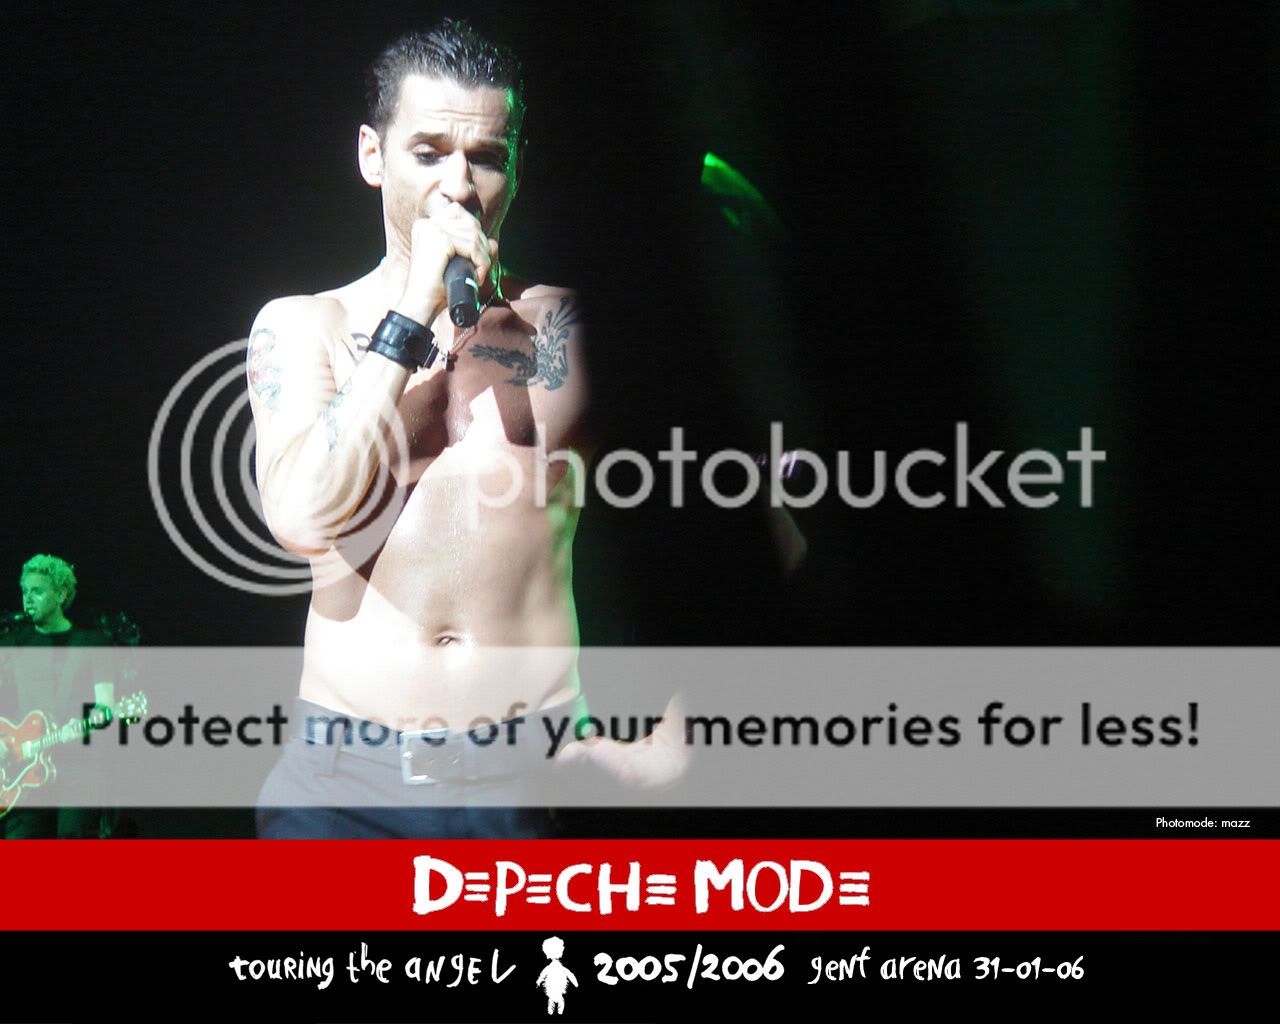 http://i237.photobucket.com/albums/ff168/ladygahan/Dave_G4/depeche-mode-genf-1280x1024.jpg